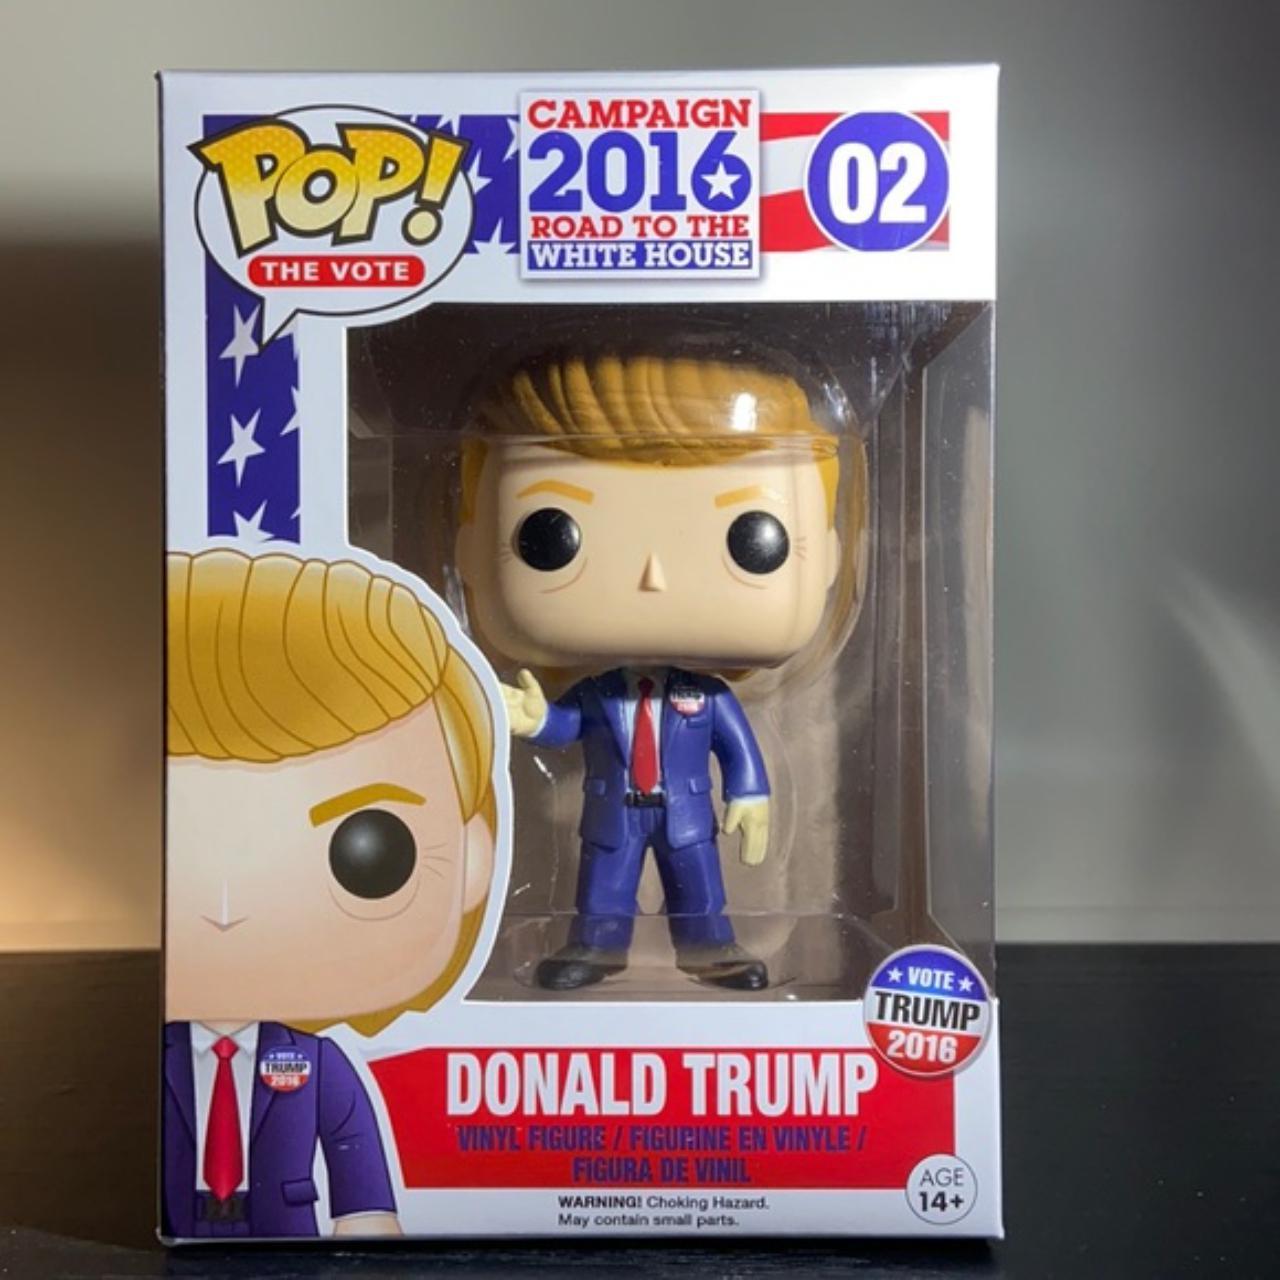 Product Image 1 - Donald Trump
Type: Vinyl Art Toys
Brand: